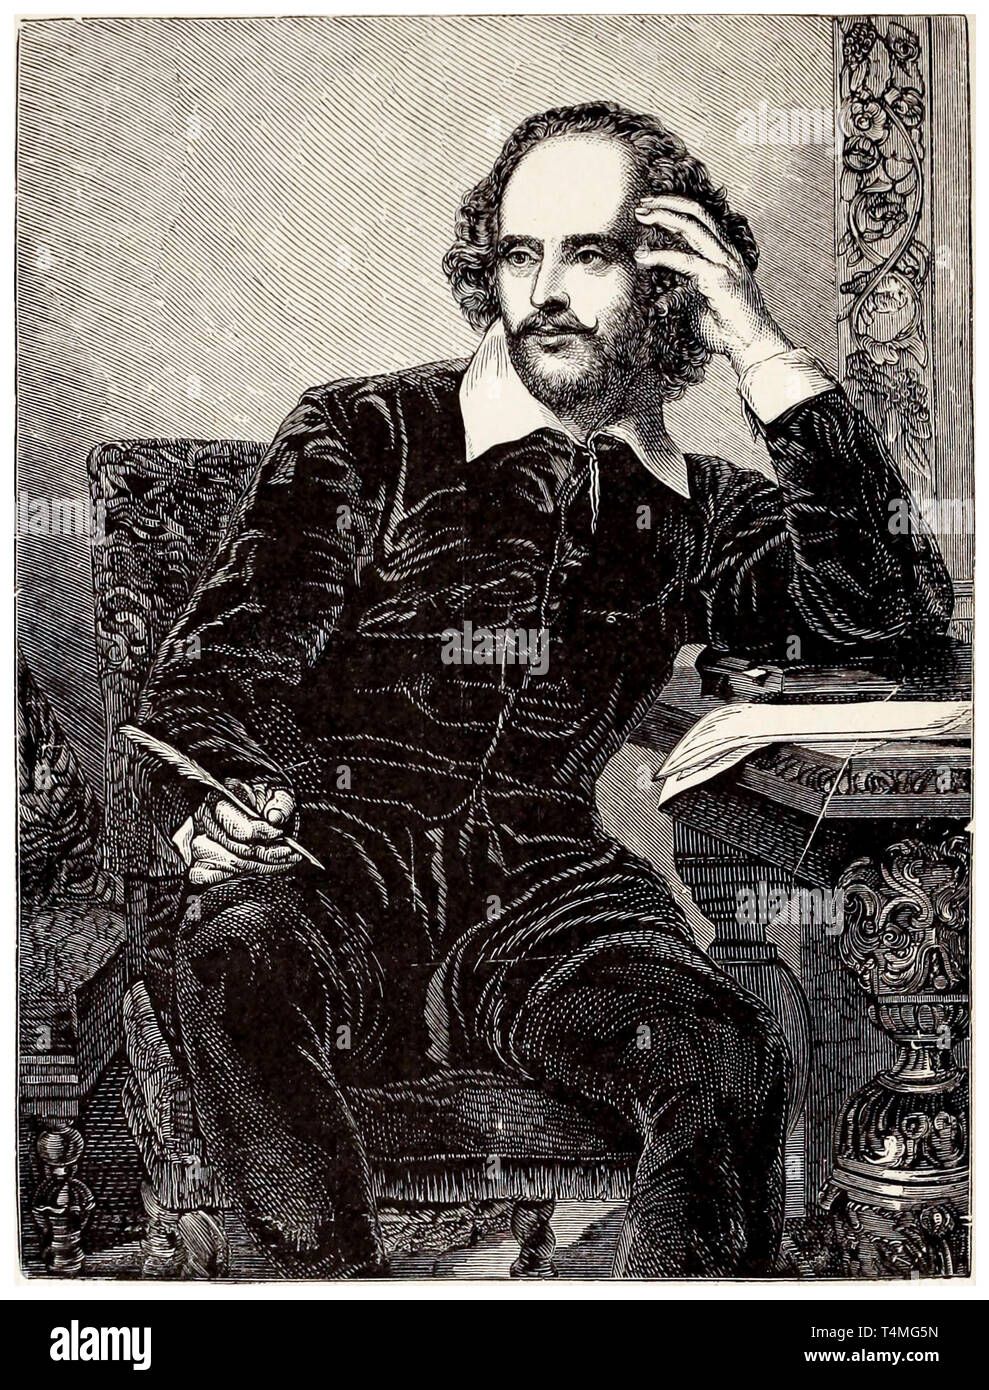 William Shakespeare (1564-1616), gravure portrait, 1898 Banque D'Images